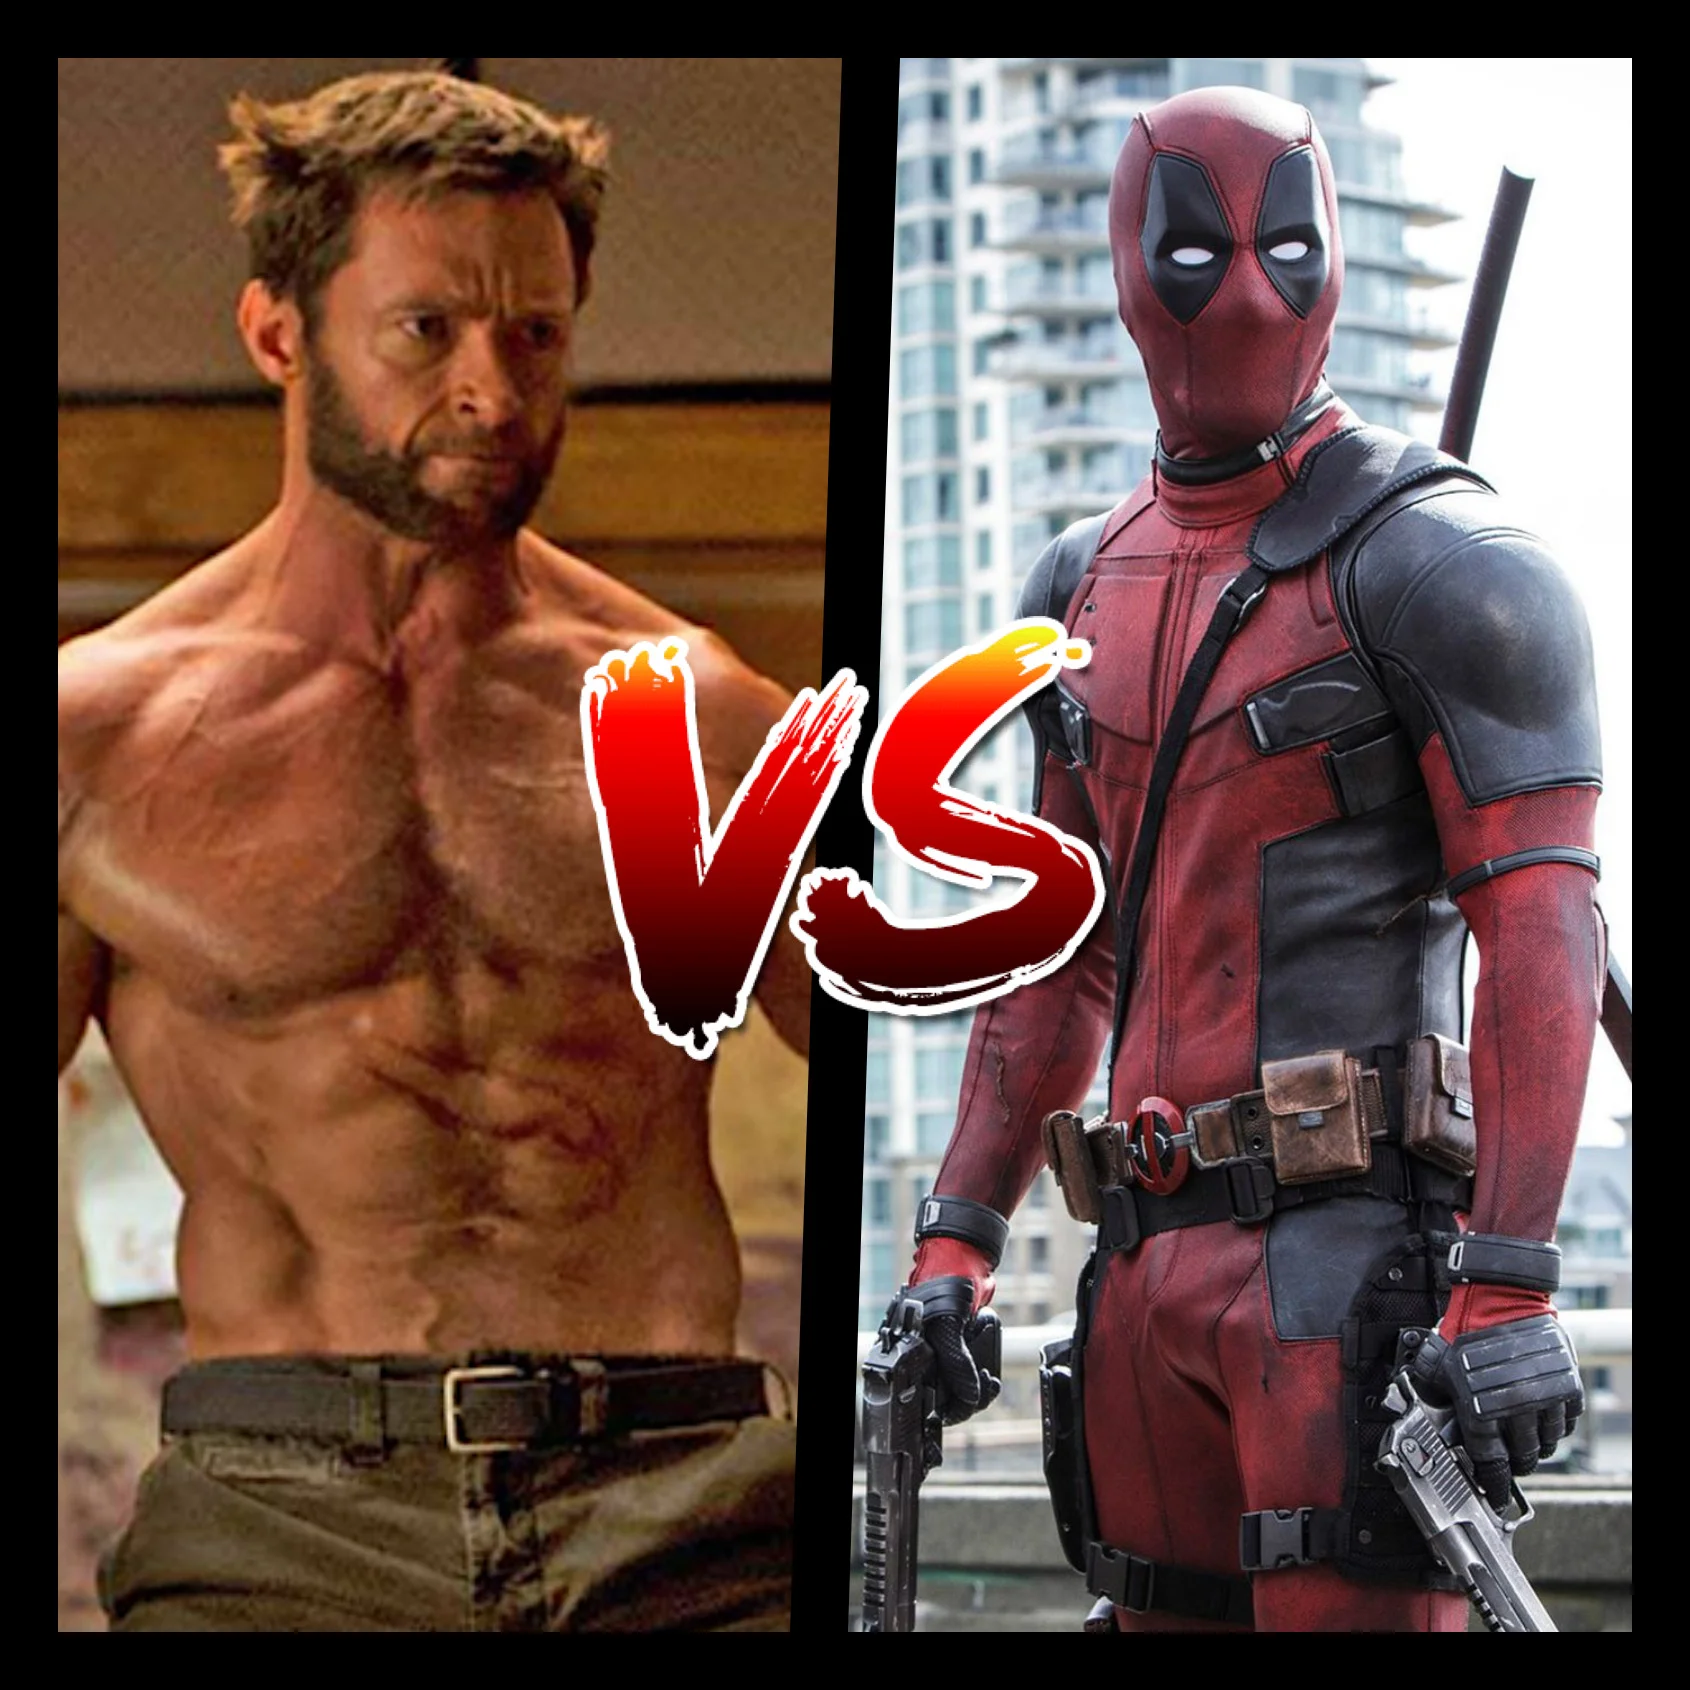 Ryan Reynolds vs Hugh Jackman: Who does watches better?